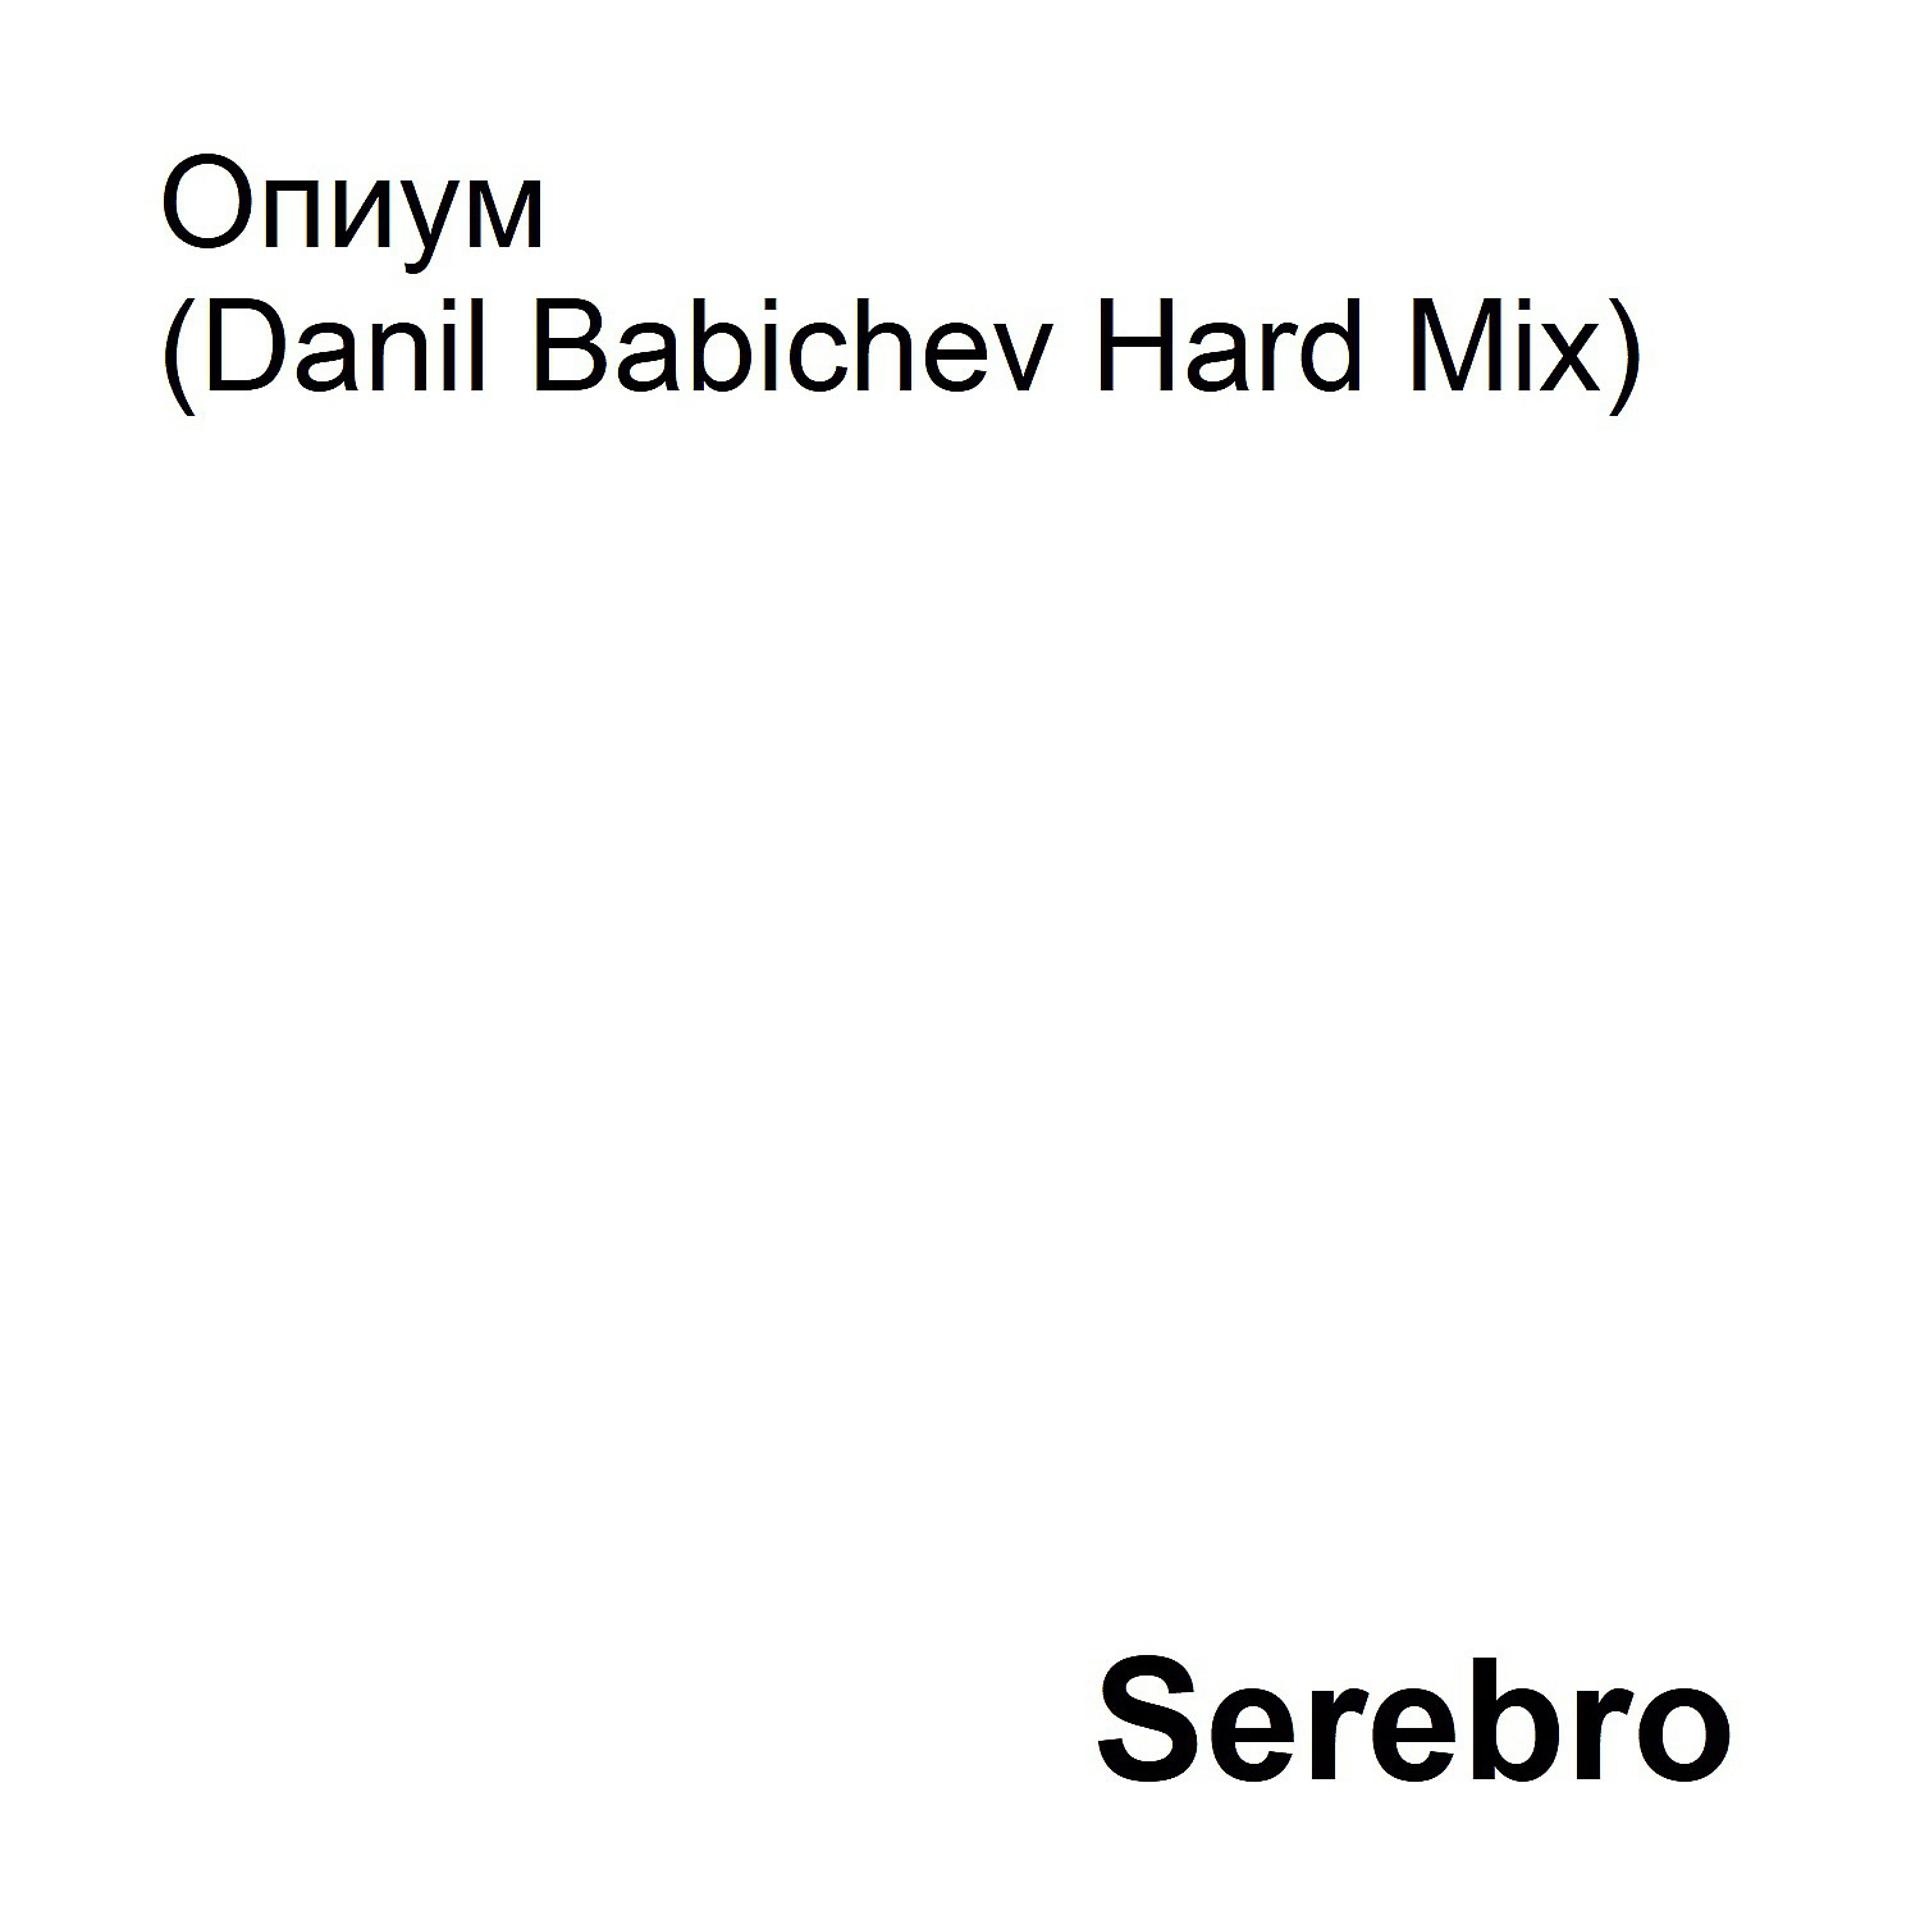 Постер к треку Serebro - Опиум (Danil Babichev Hard Mix)